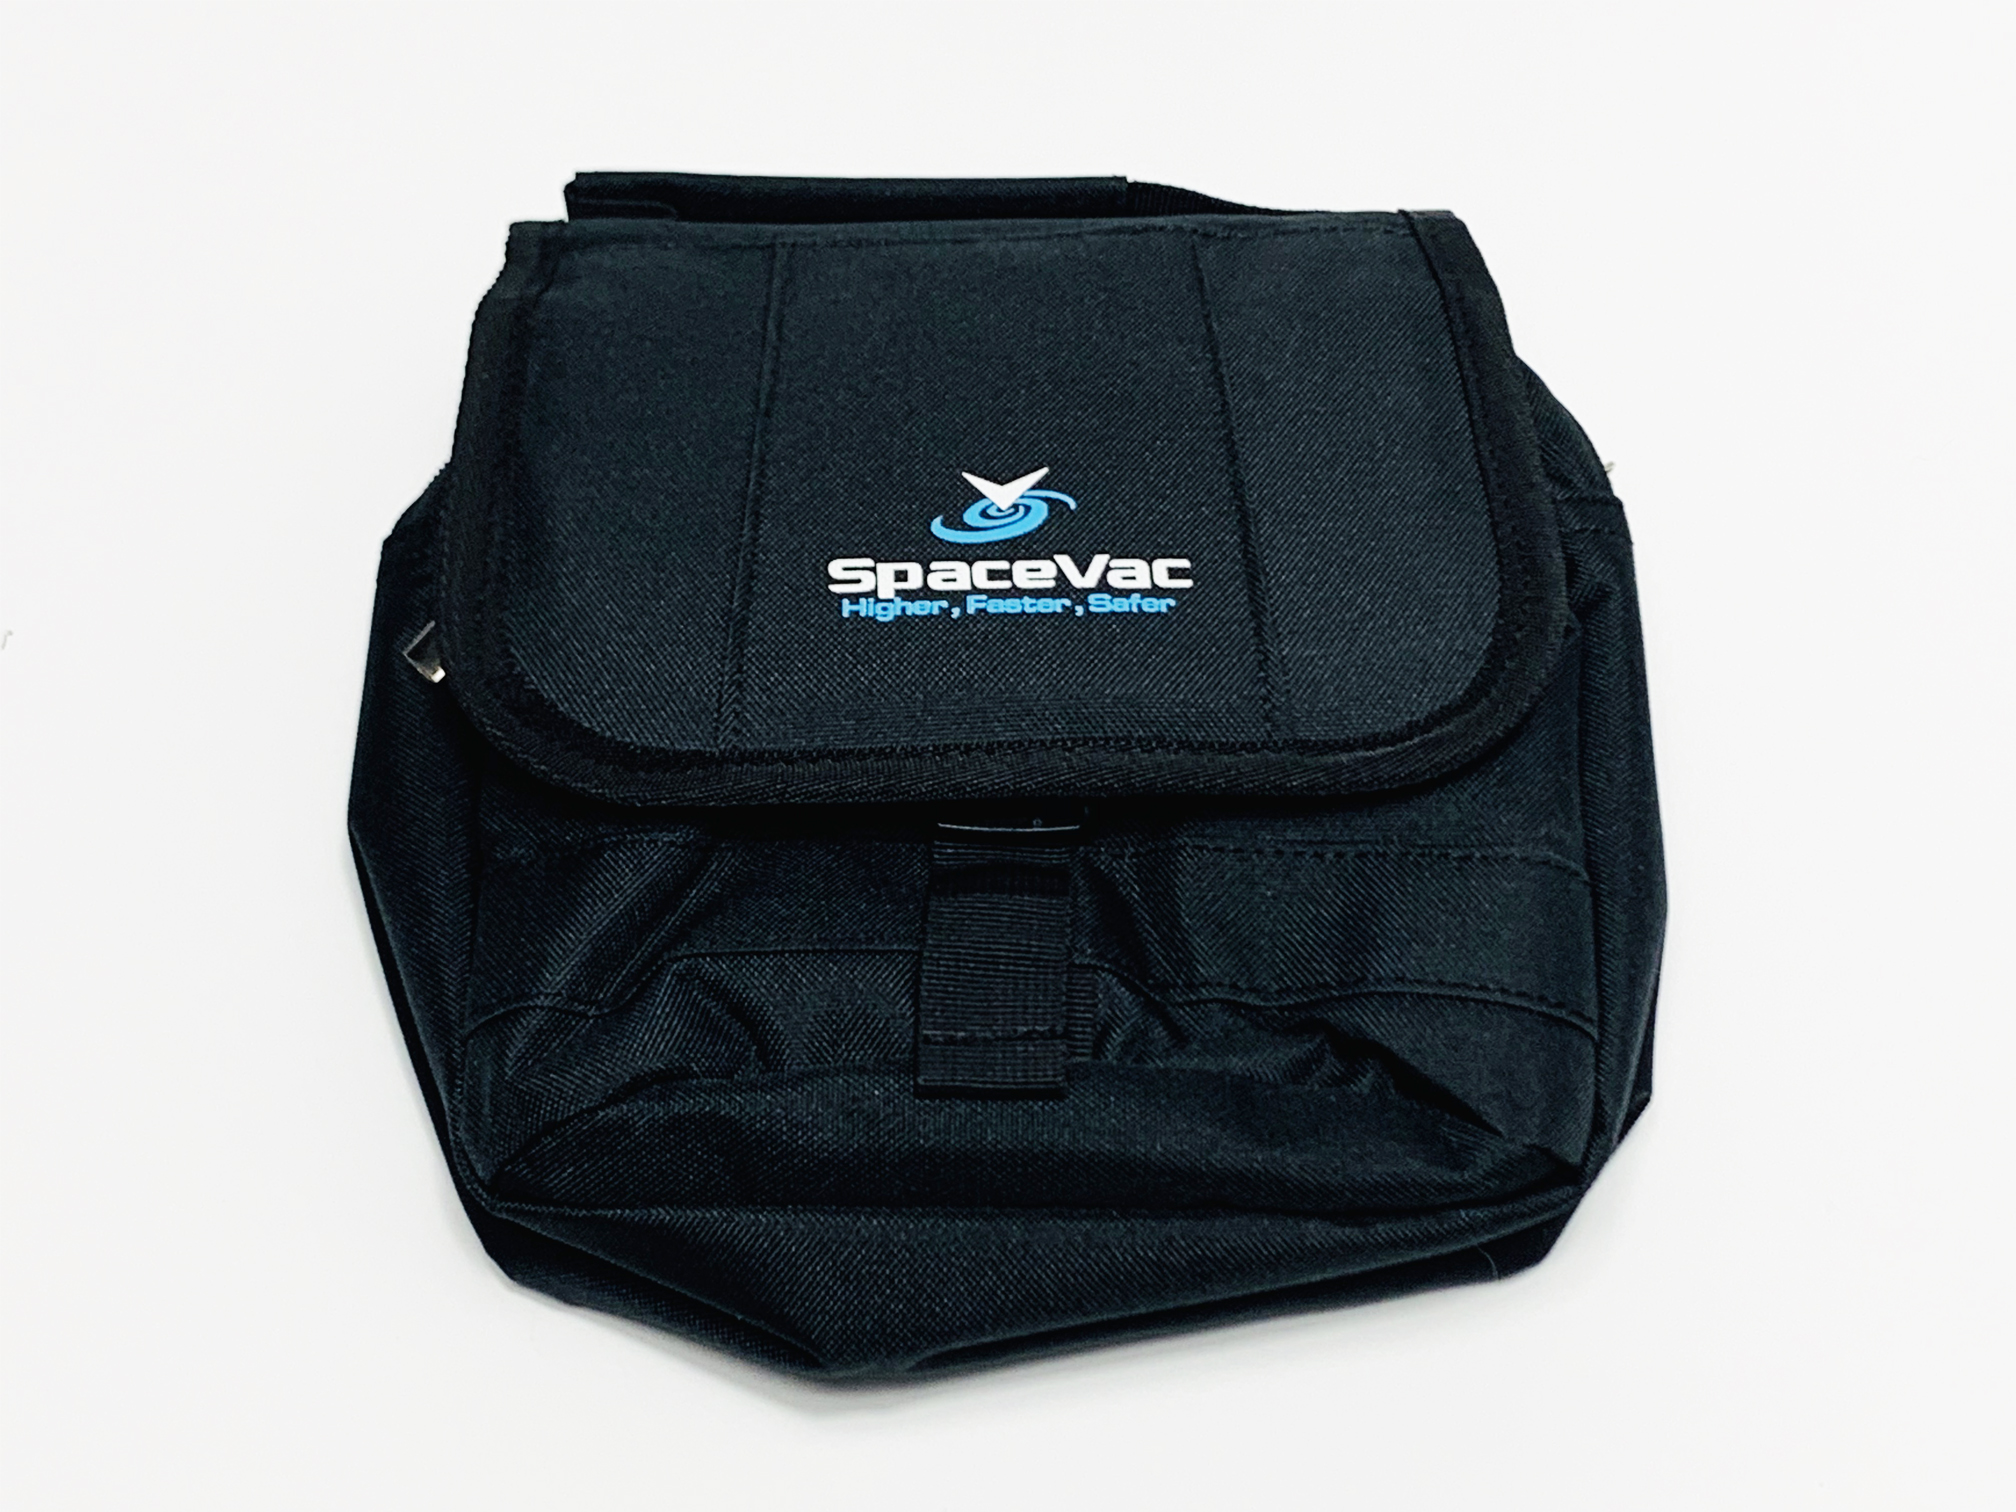 SpaceVac Explorer Camera & Monitoring System Bag